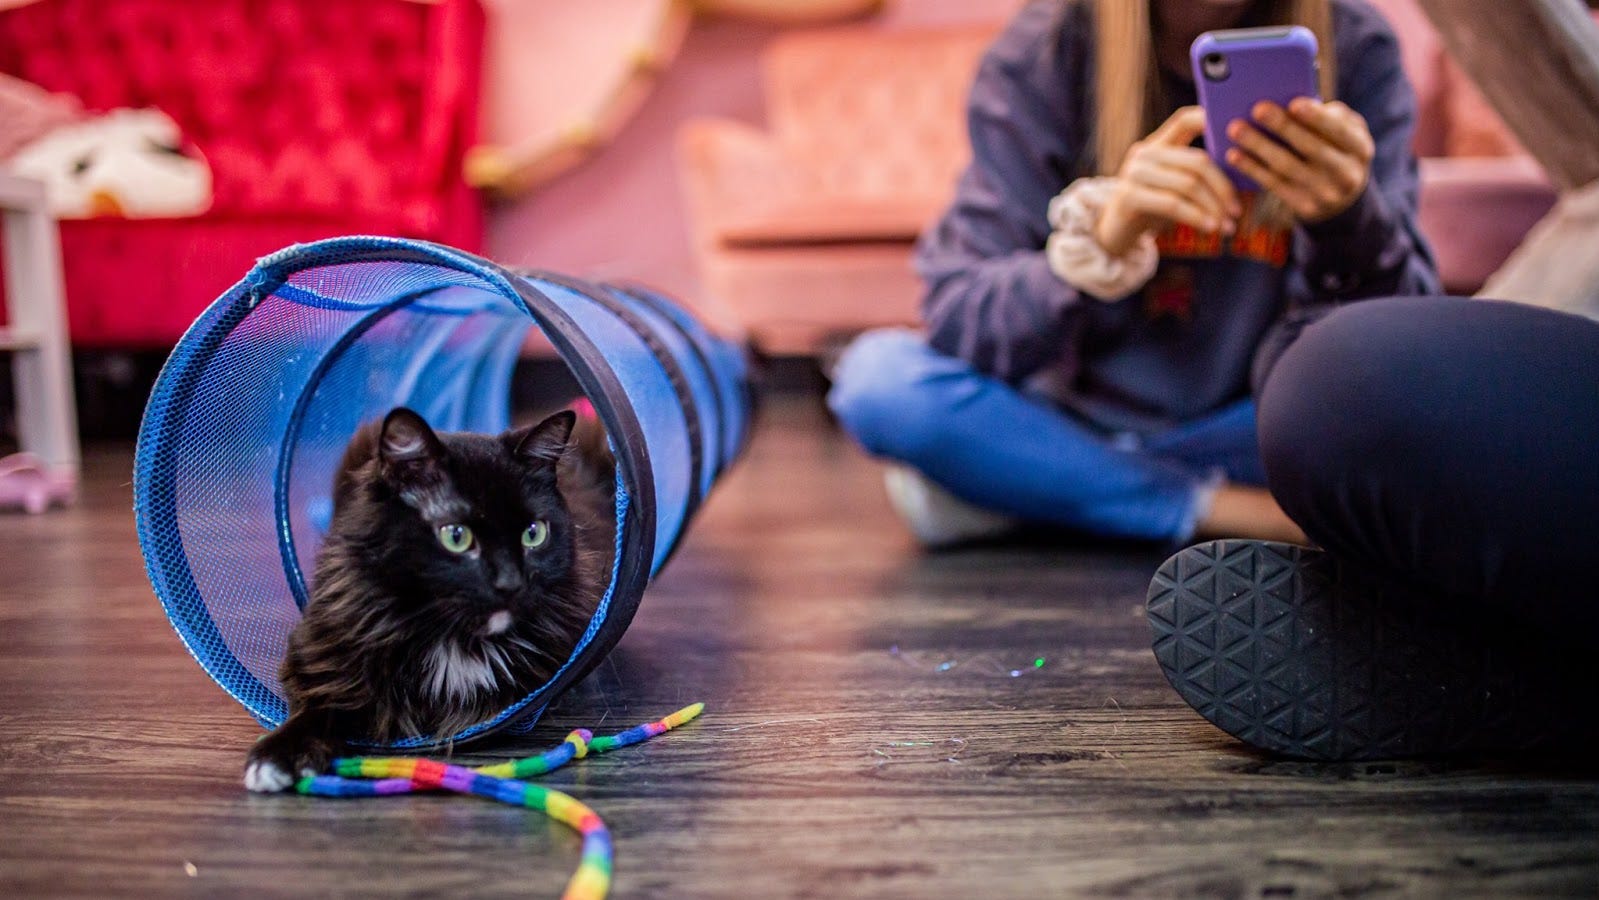  Tally  Cat  Caf  celebrates 600 adoptions